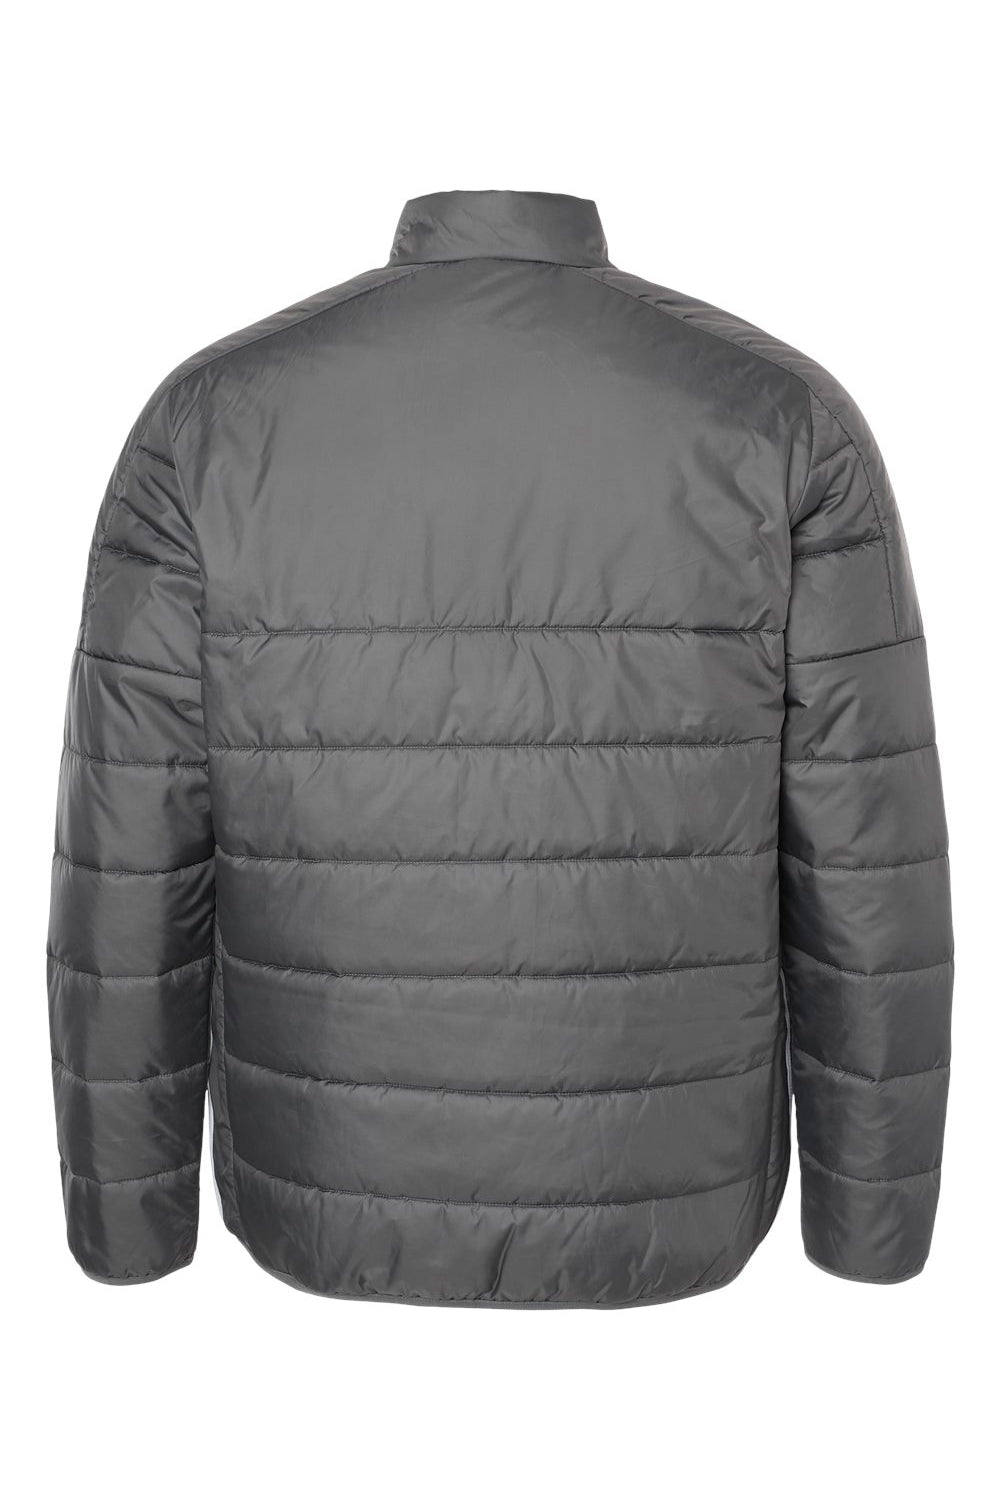 Adidas A570 Mens Full Zip Puffer Jacket Grey Flat Back